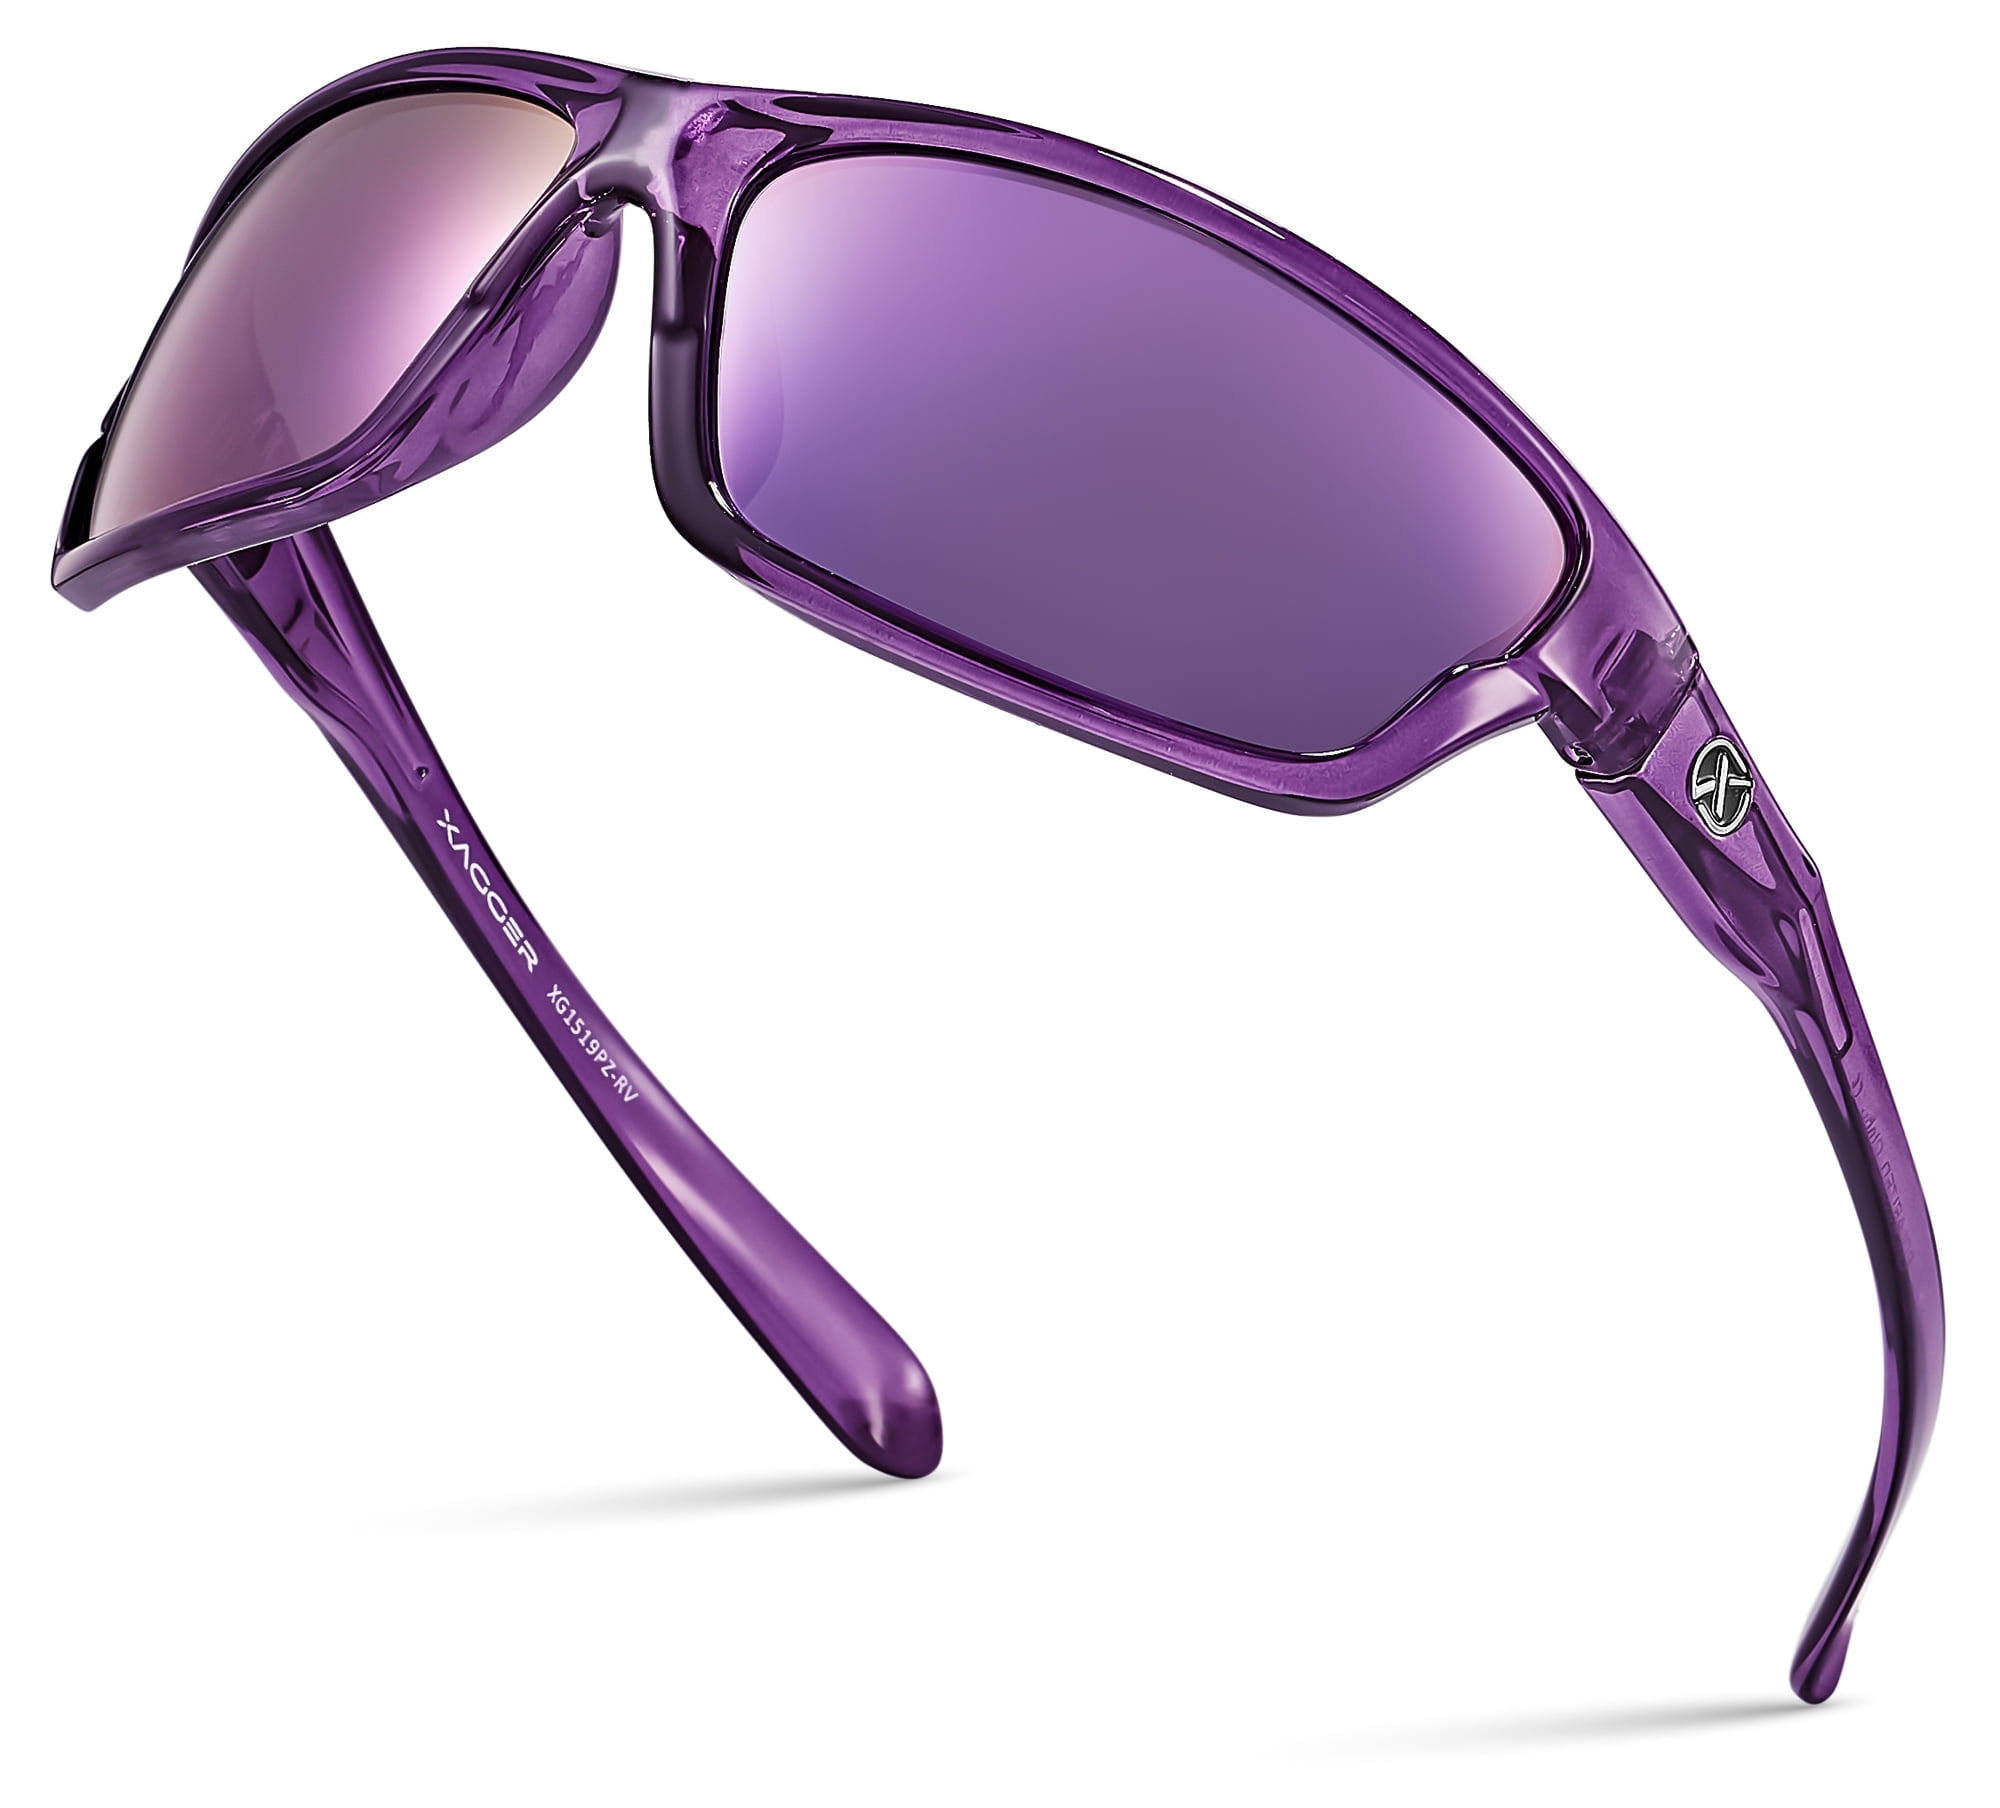 TR90 Round Polarized Sport Sunglasses For Men Driving Spring Hinge Glasses  New